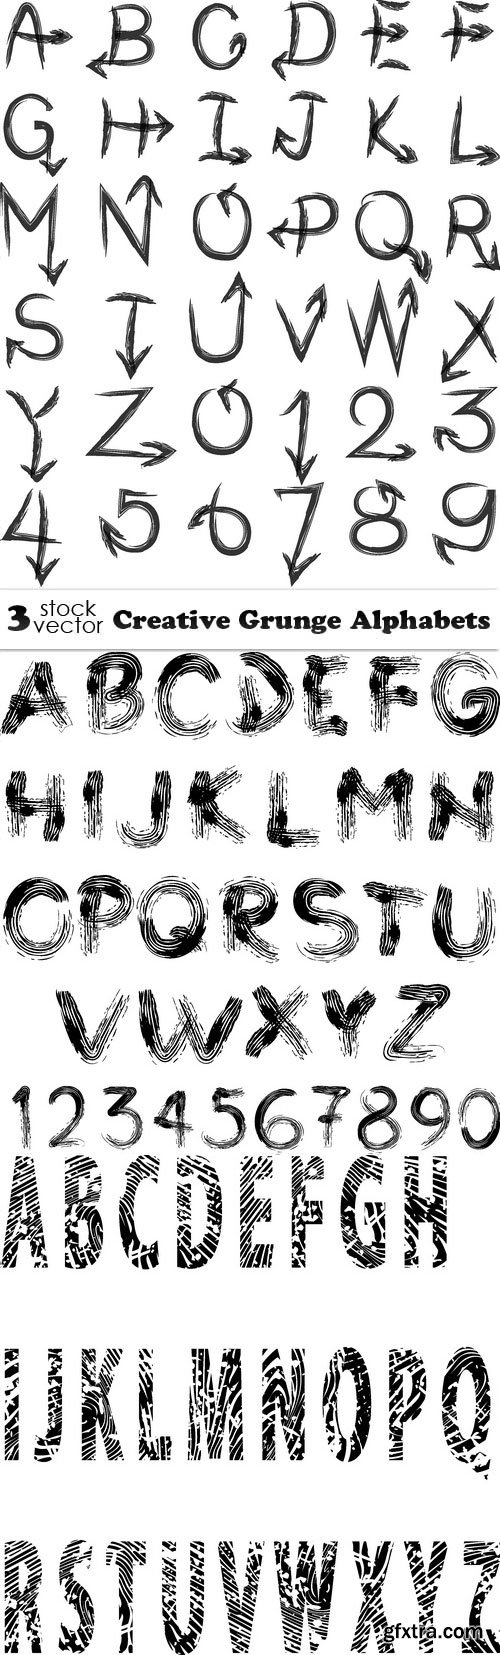 Vectors - Creative Grunge Alphabets